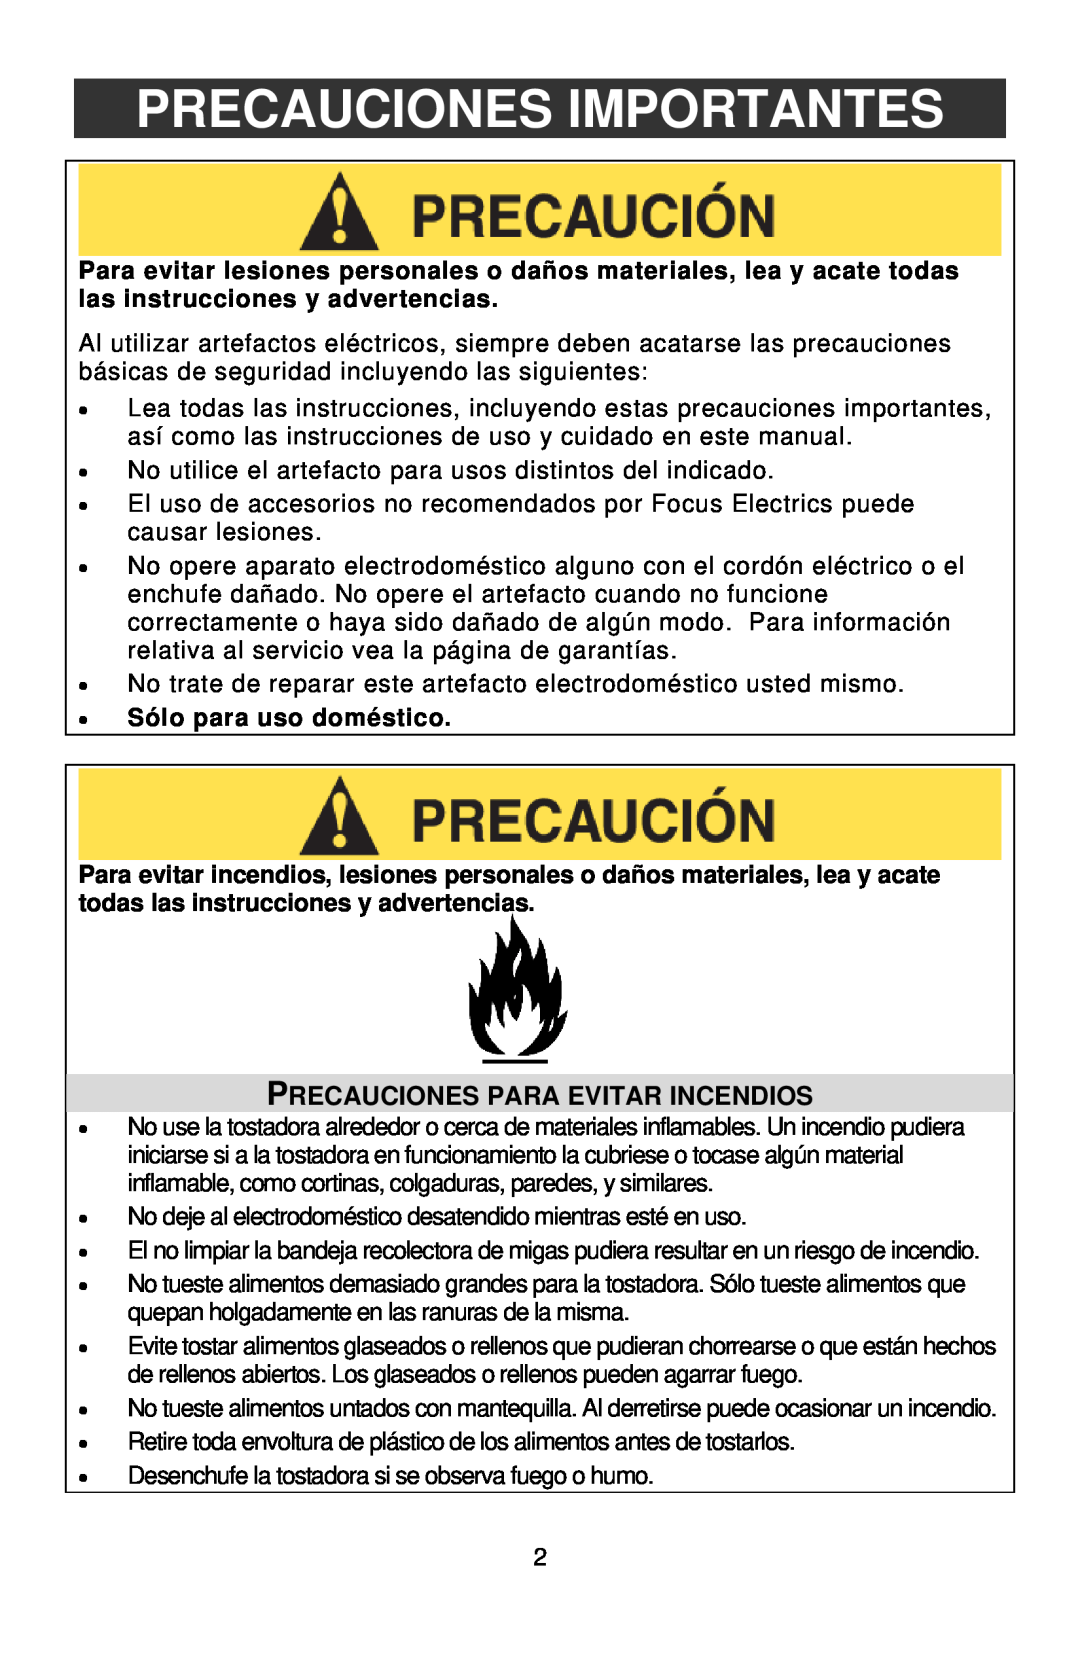 West Bend Studio Toaster instruction manual Precauciones Importantes, Precauciones Para Evitar Incendios 